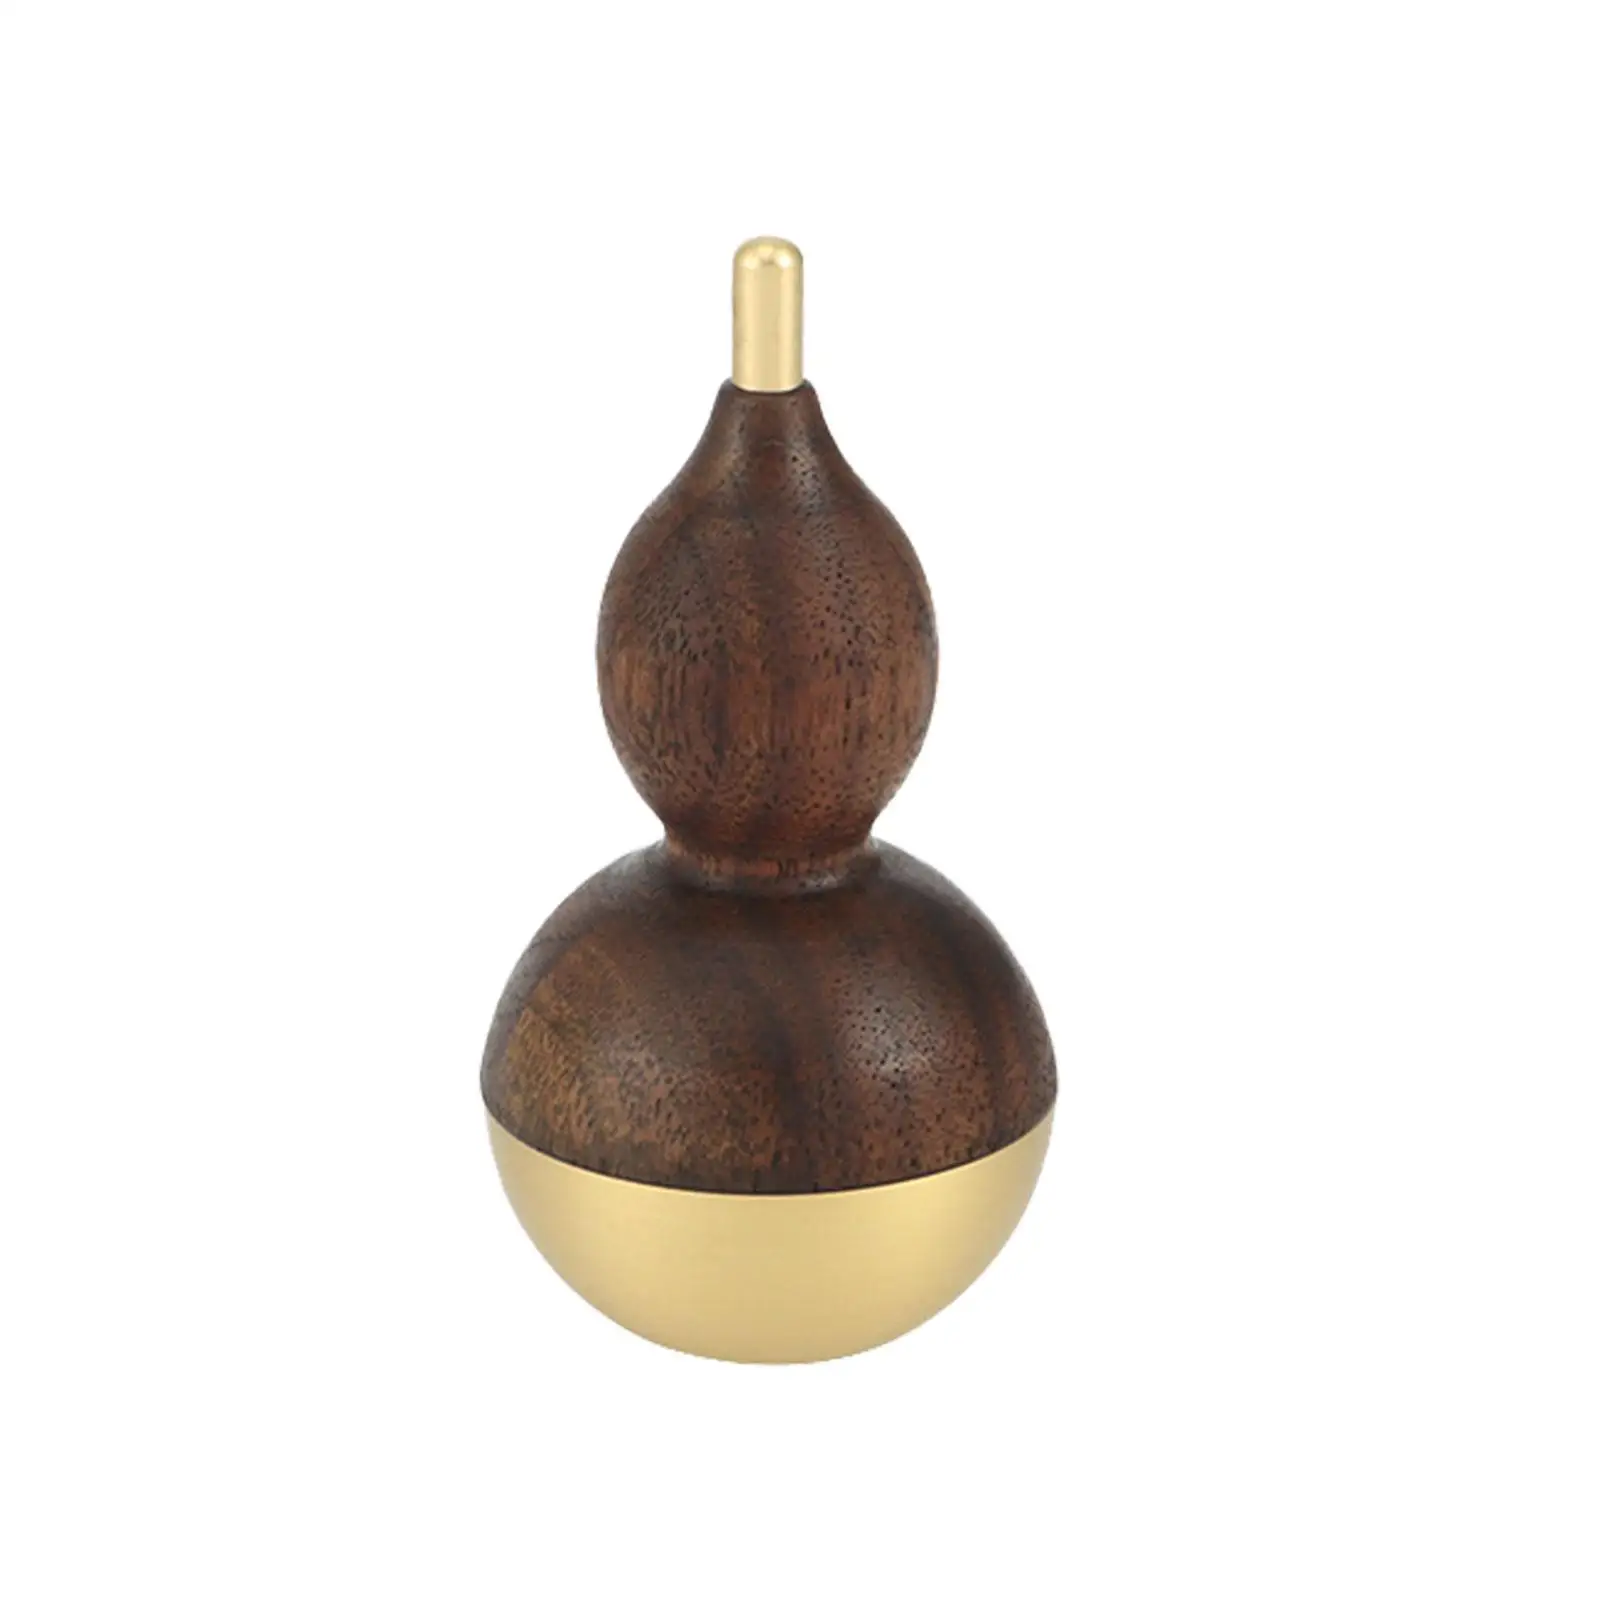  Tumbler Gourd Lucky Ornament Feng Shui Figurine for Car Home Desktop Decor Crafts